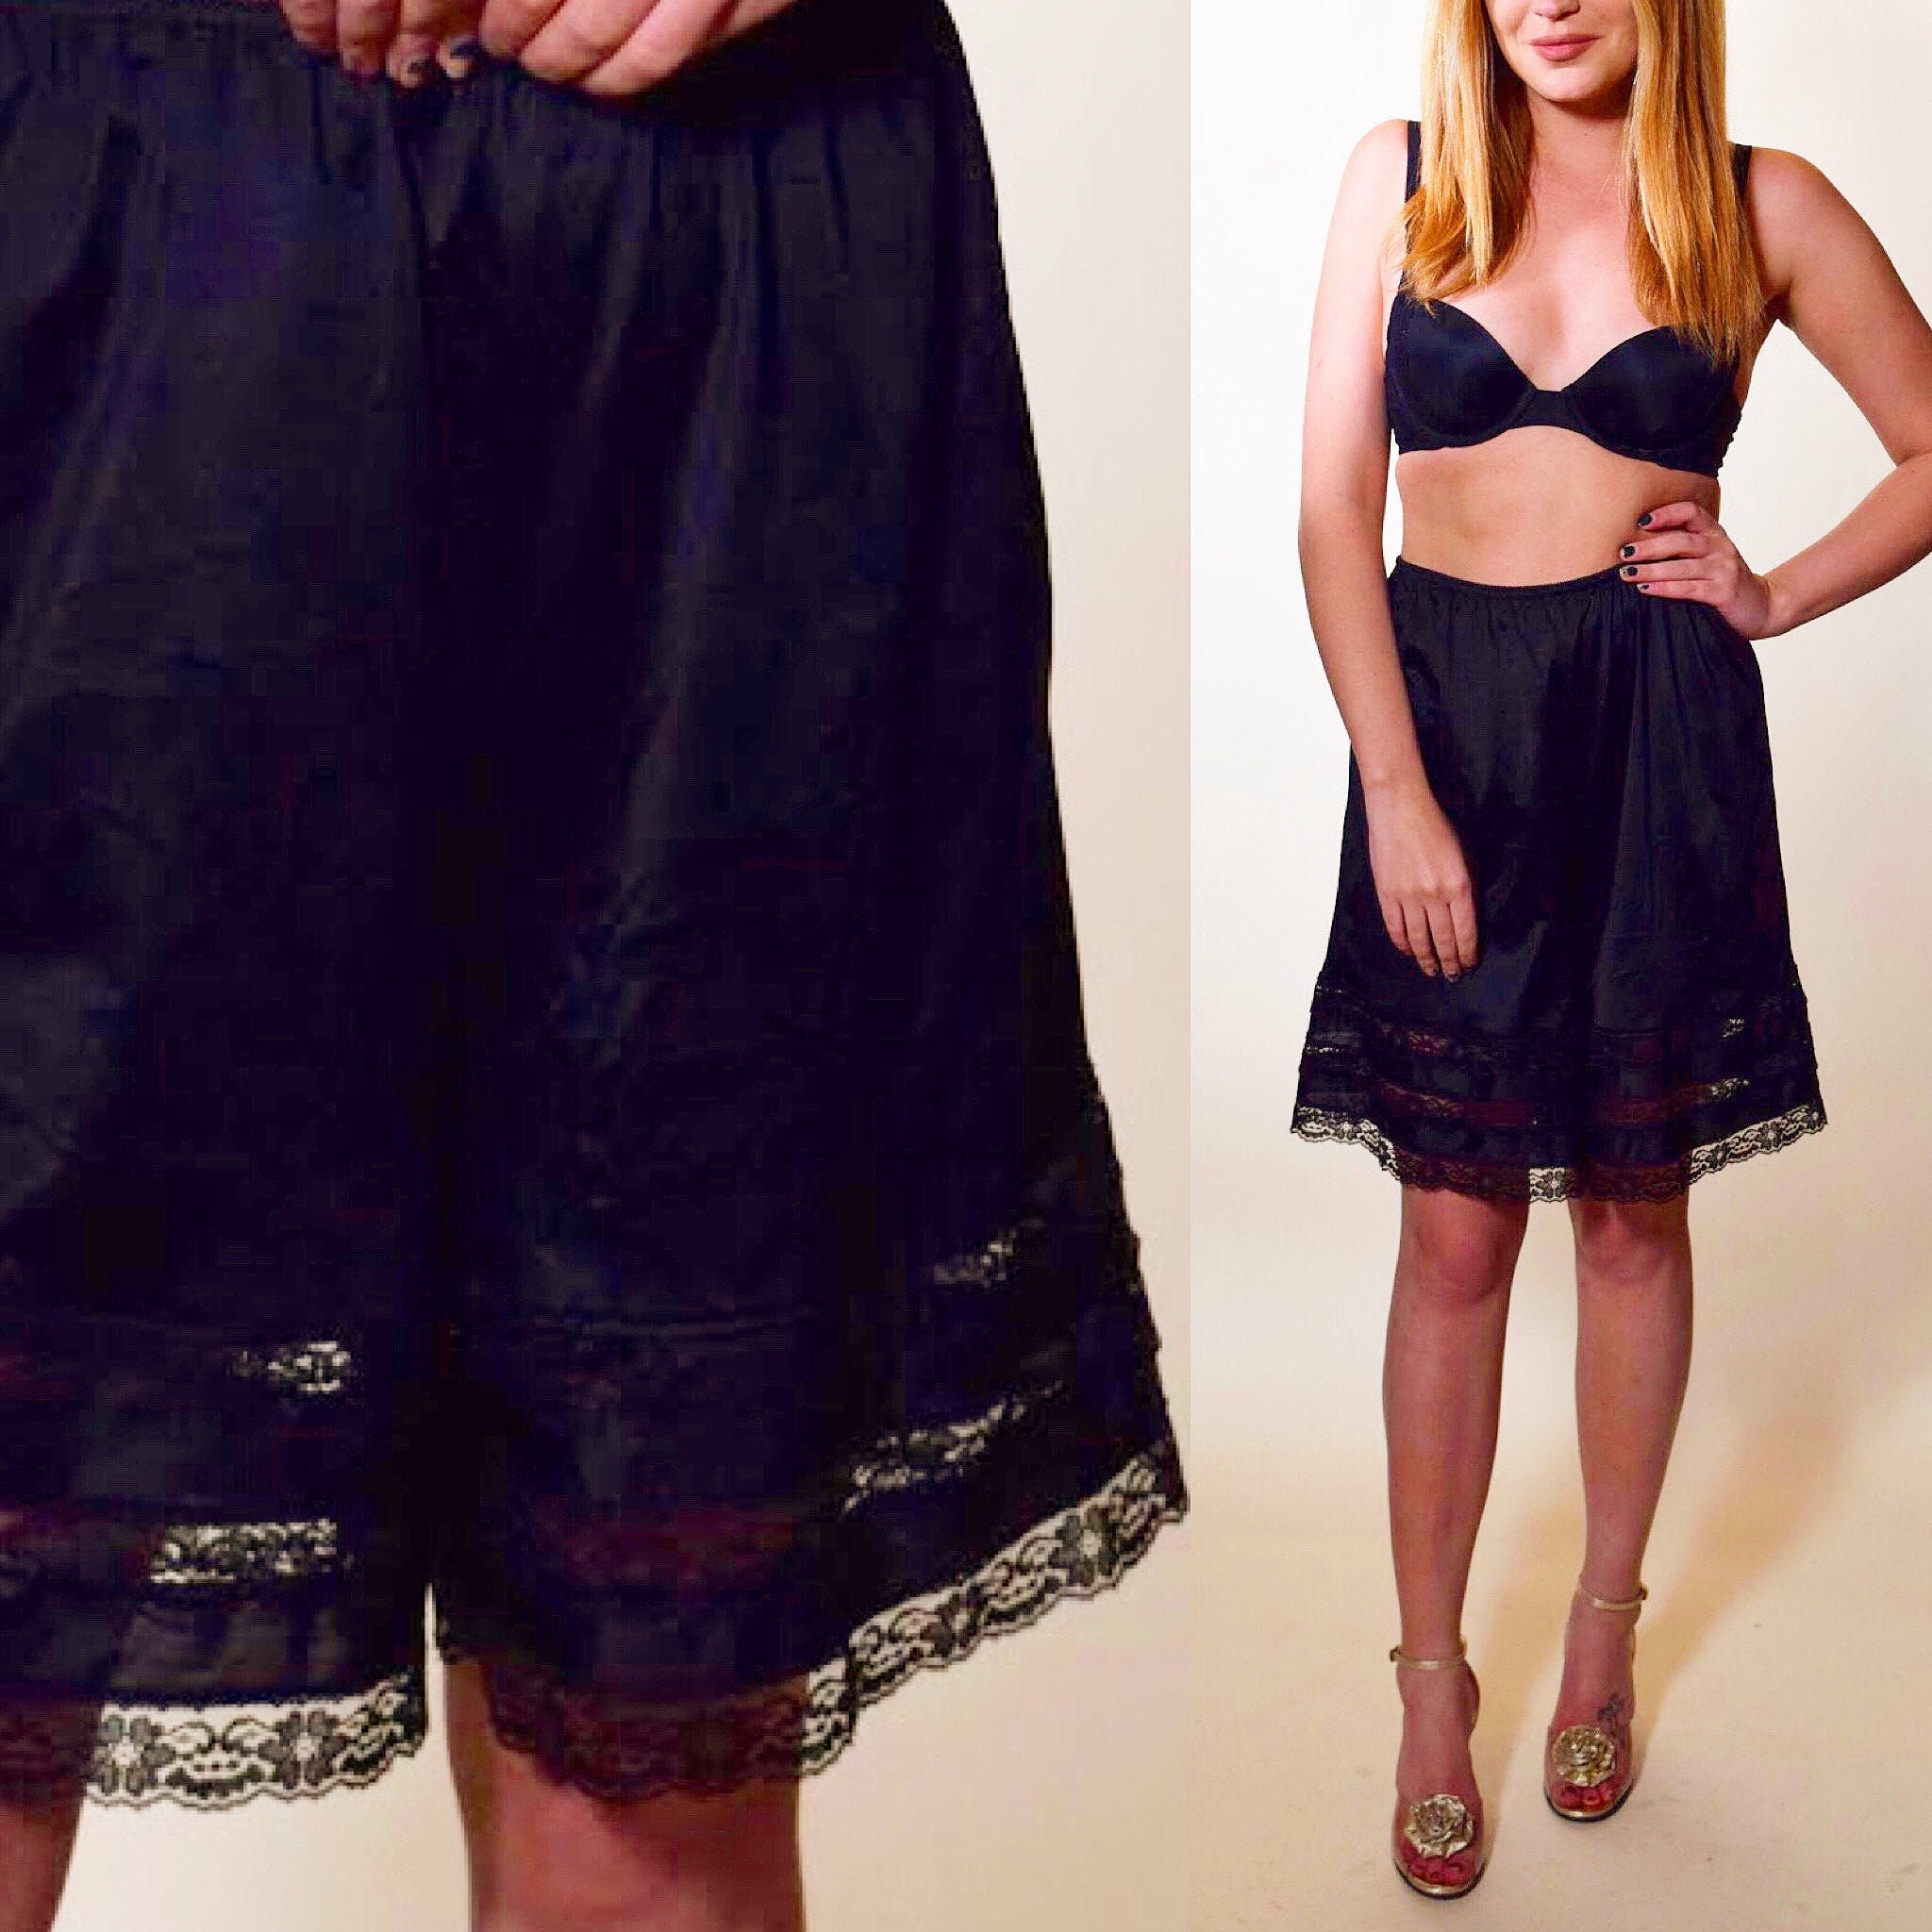 Authentic vintage black nylon lace trim Half slip bloomers / shorts women's  size medium - large